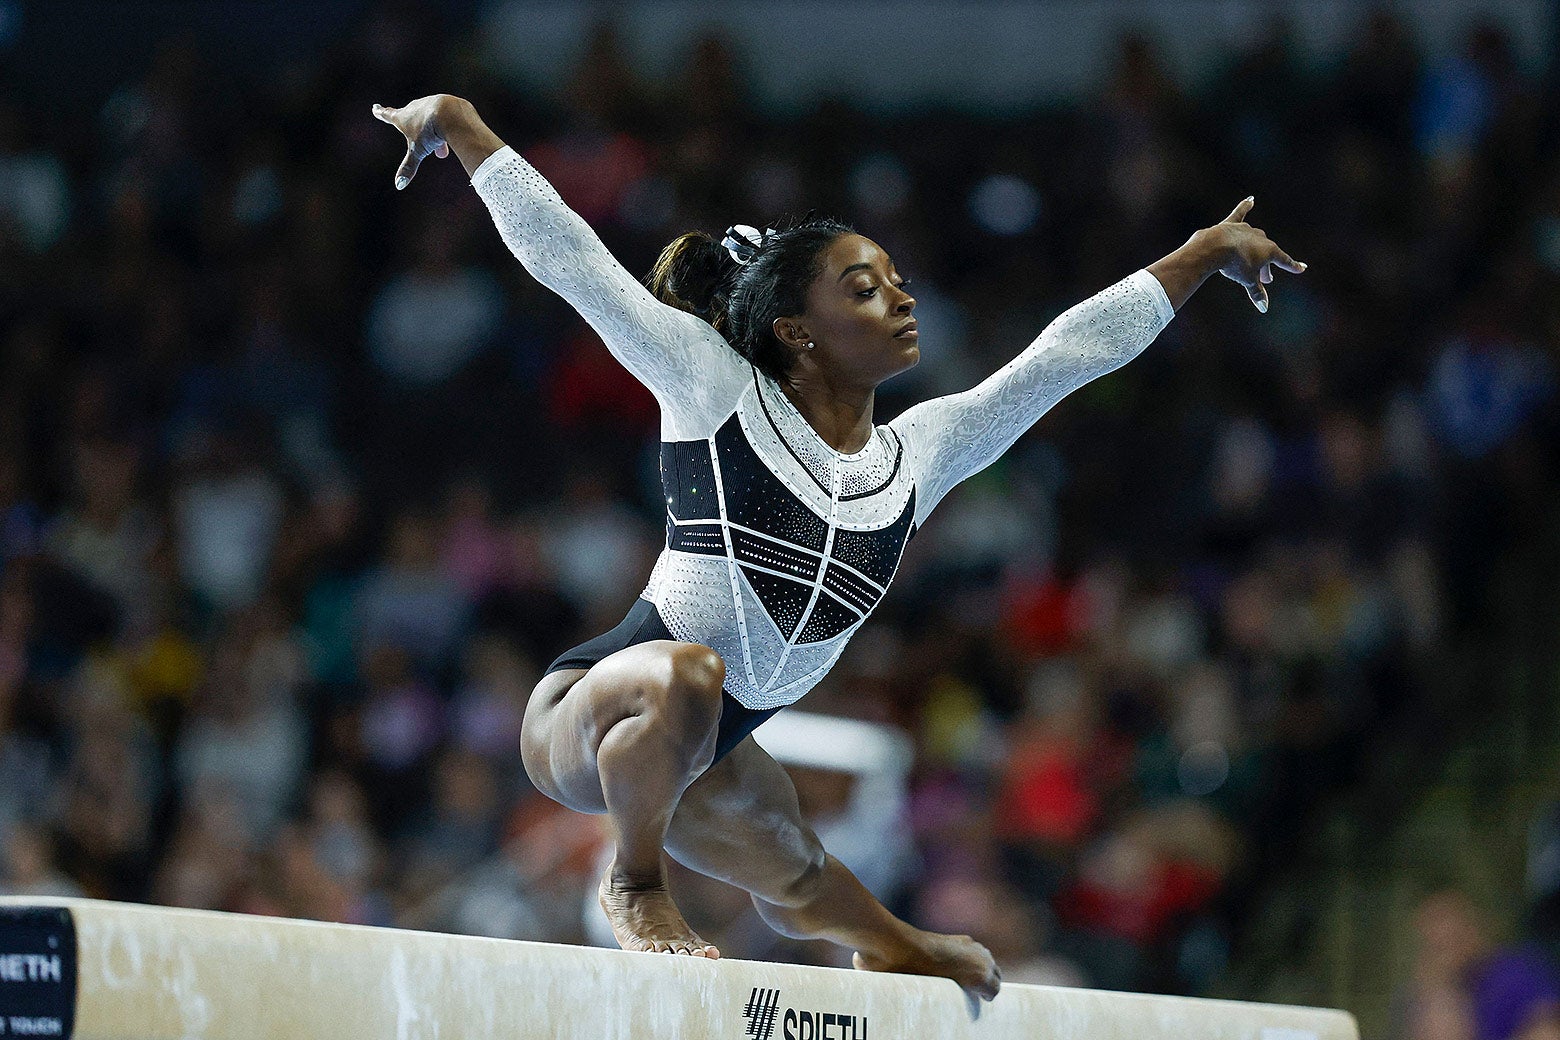 Simone Biles looks graceful and triumphant on the balance beam.